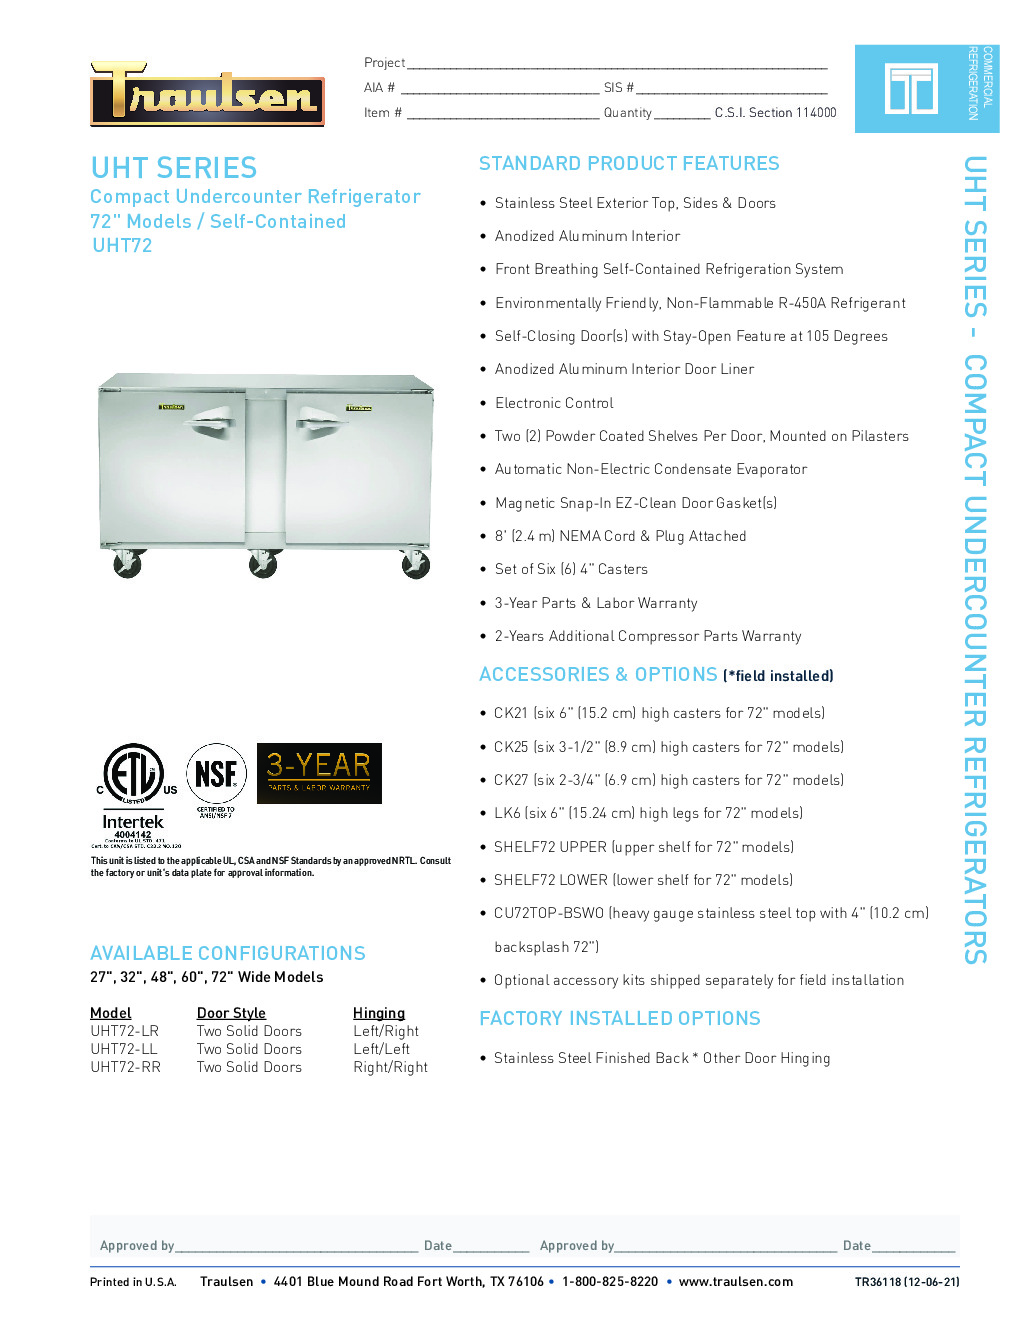 Traulsen UHT72-LR Reach-In Undercounter Refrigerator